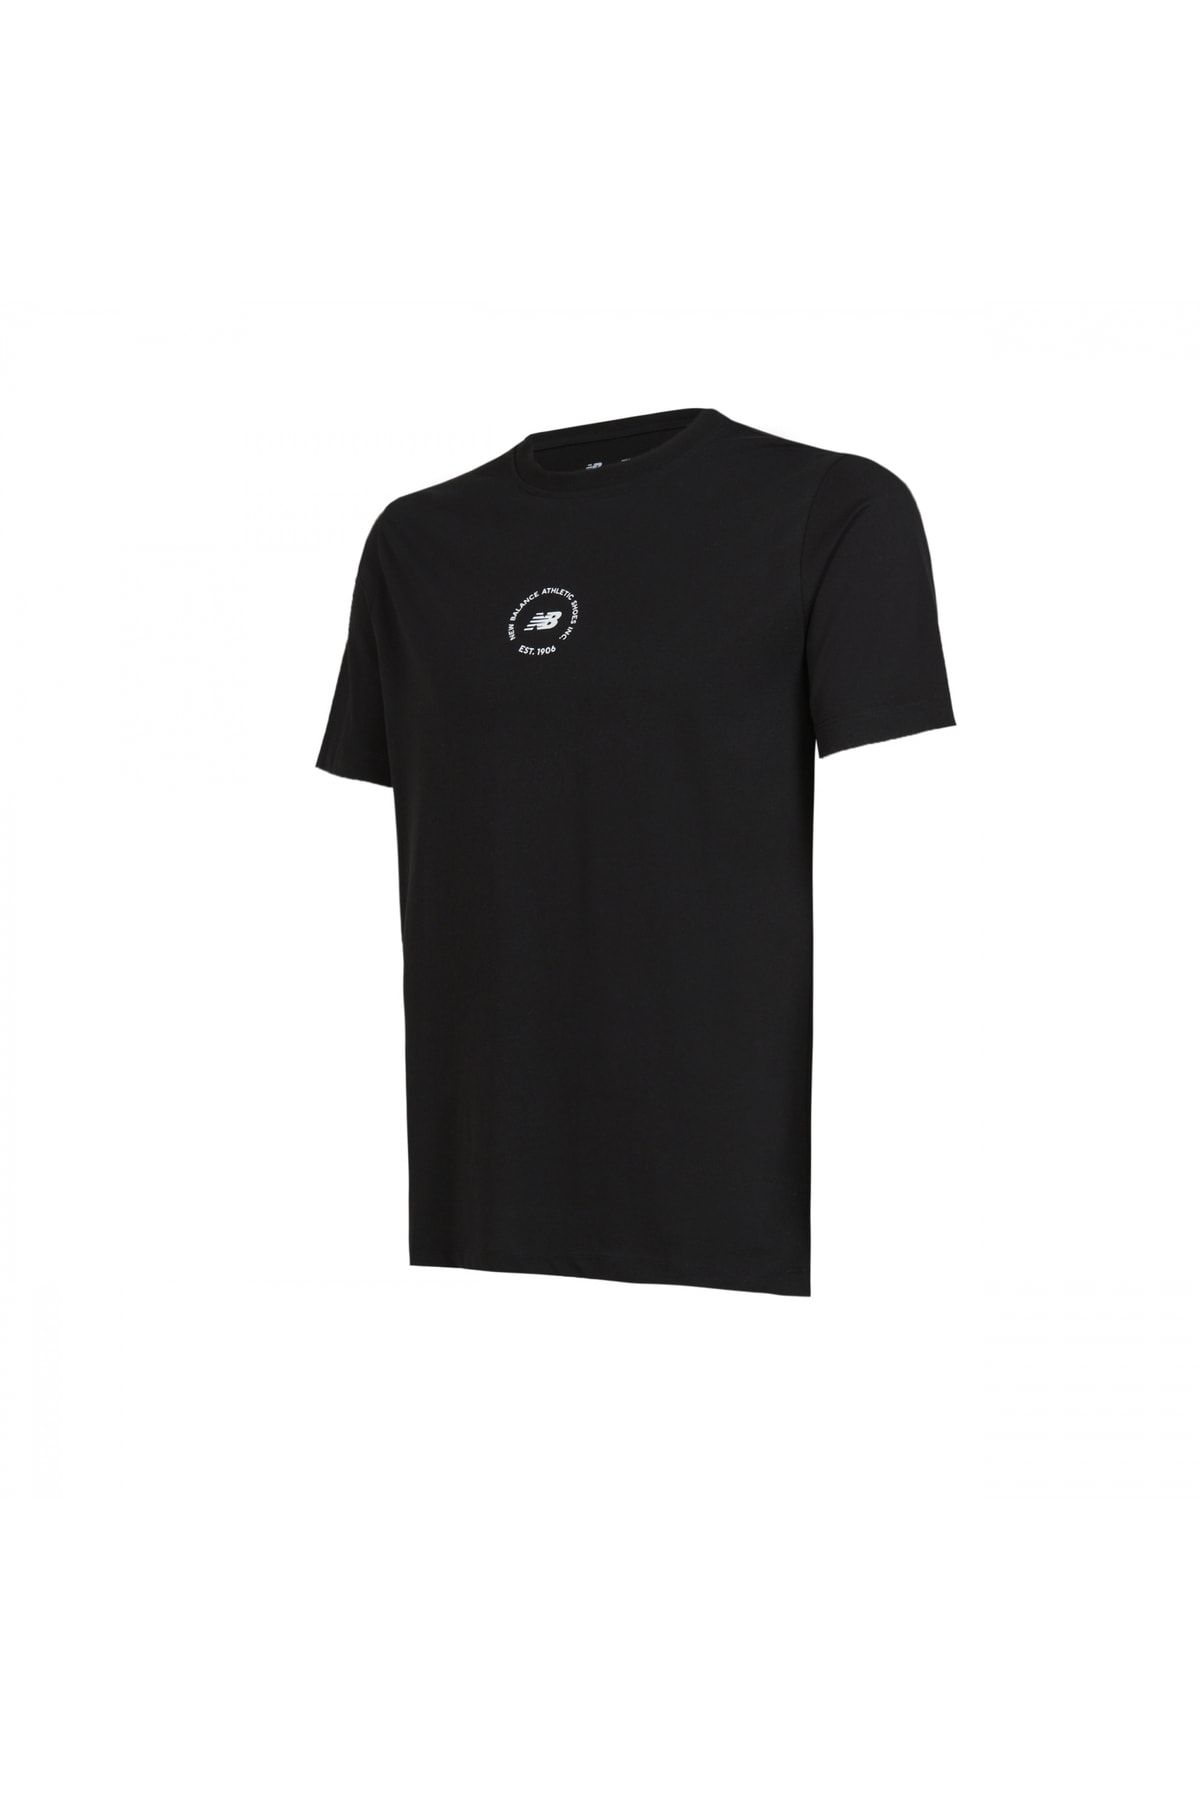 New Balance Lifestyle Siyah Unisex Tişört Unt1311-bk